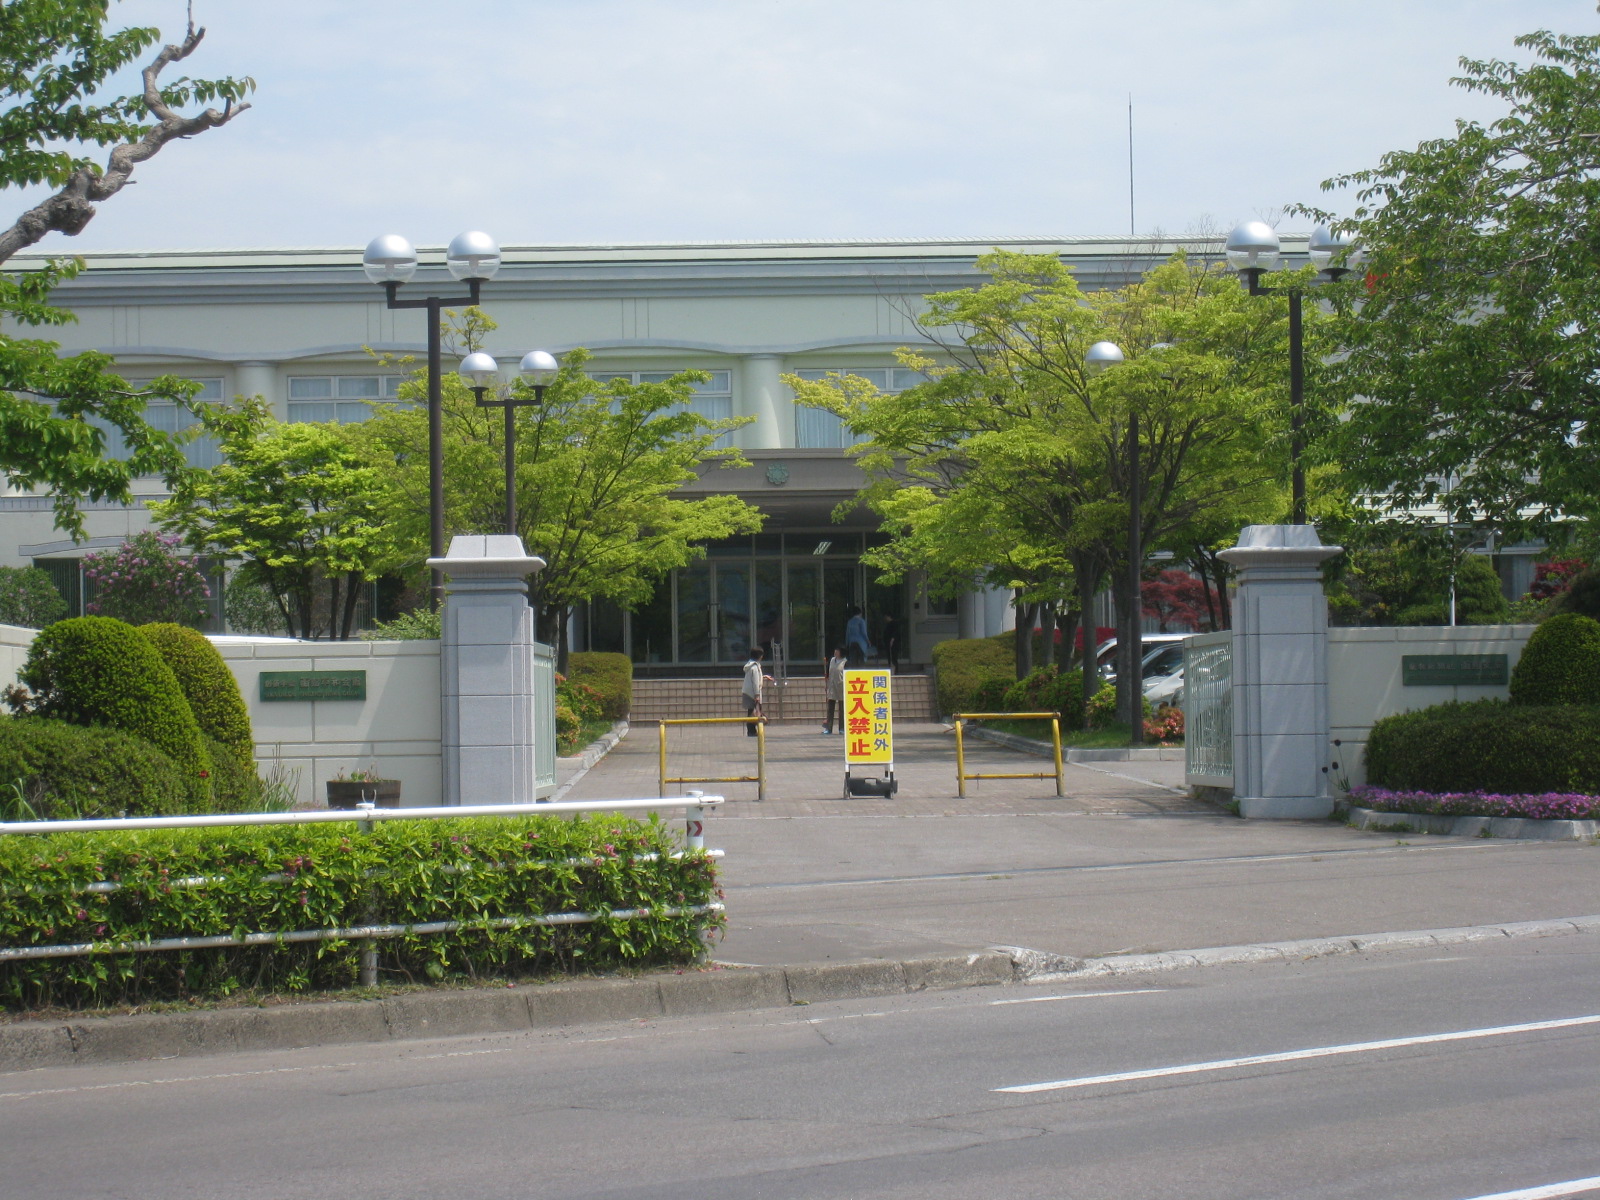 Primary school. 758m to Hakodate Municipal Chiyo Quai 岱小 school (elementary school)